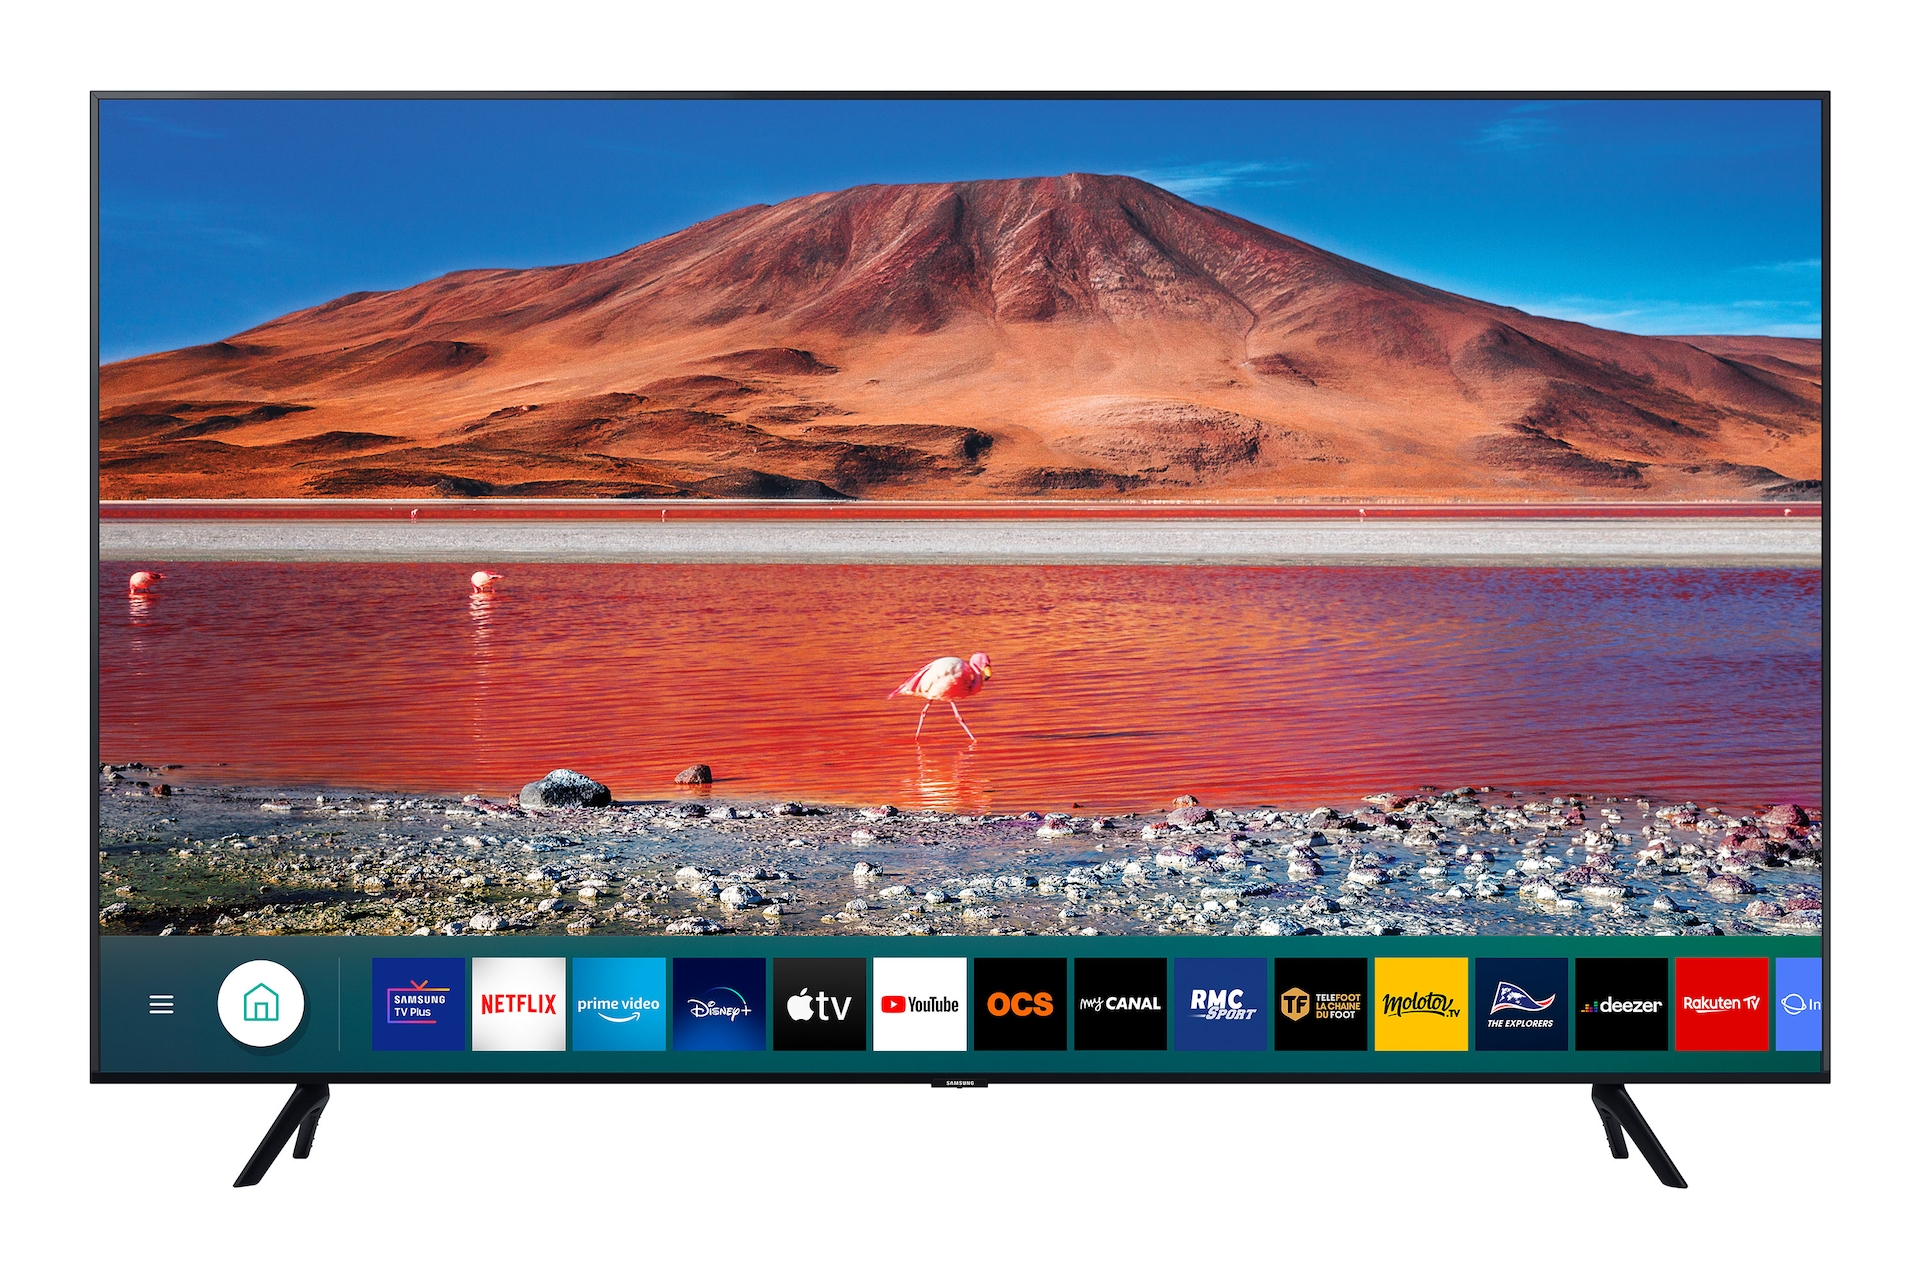 Samsung TV Crystal UHD 43TU7125, Image, Achat, prix, avis